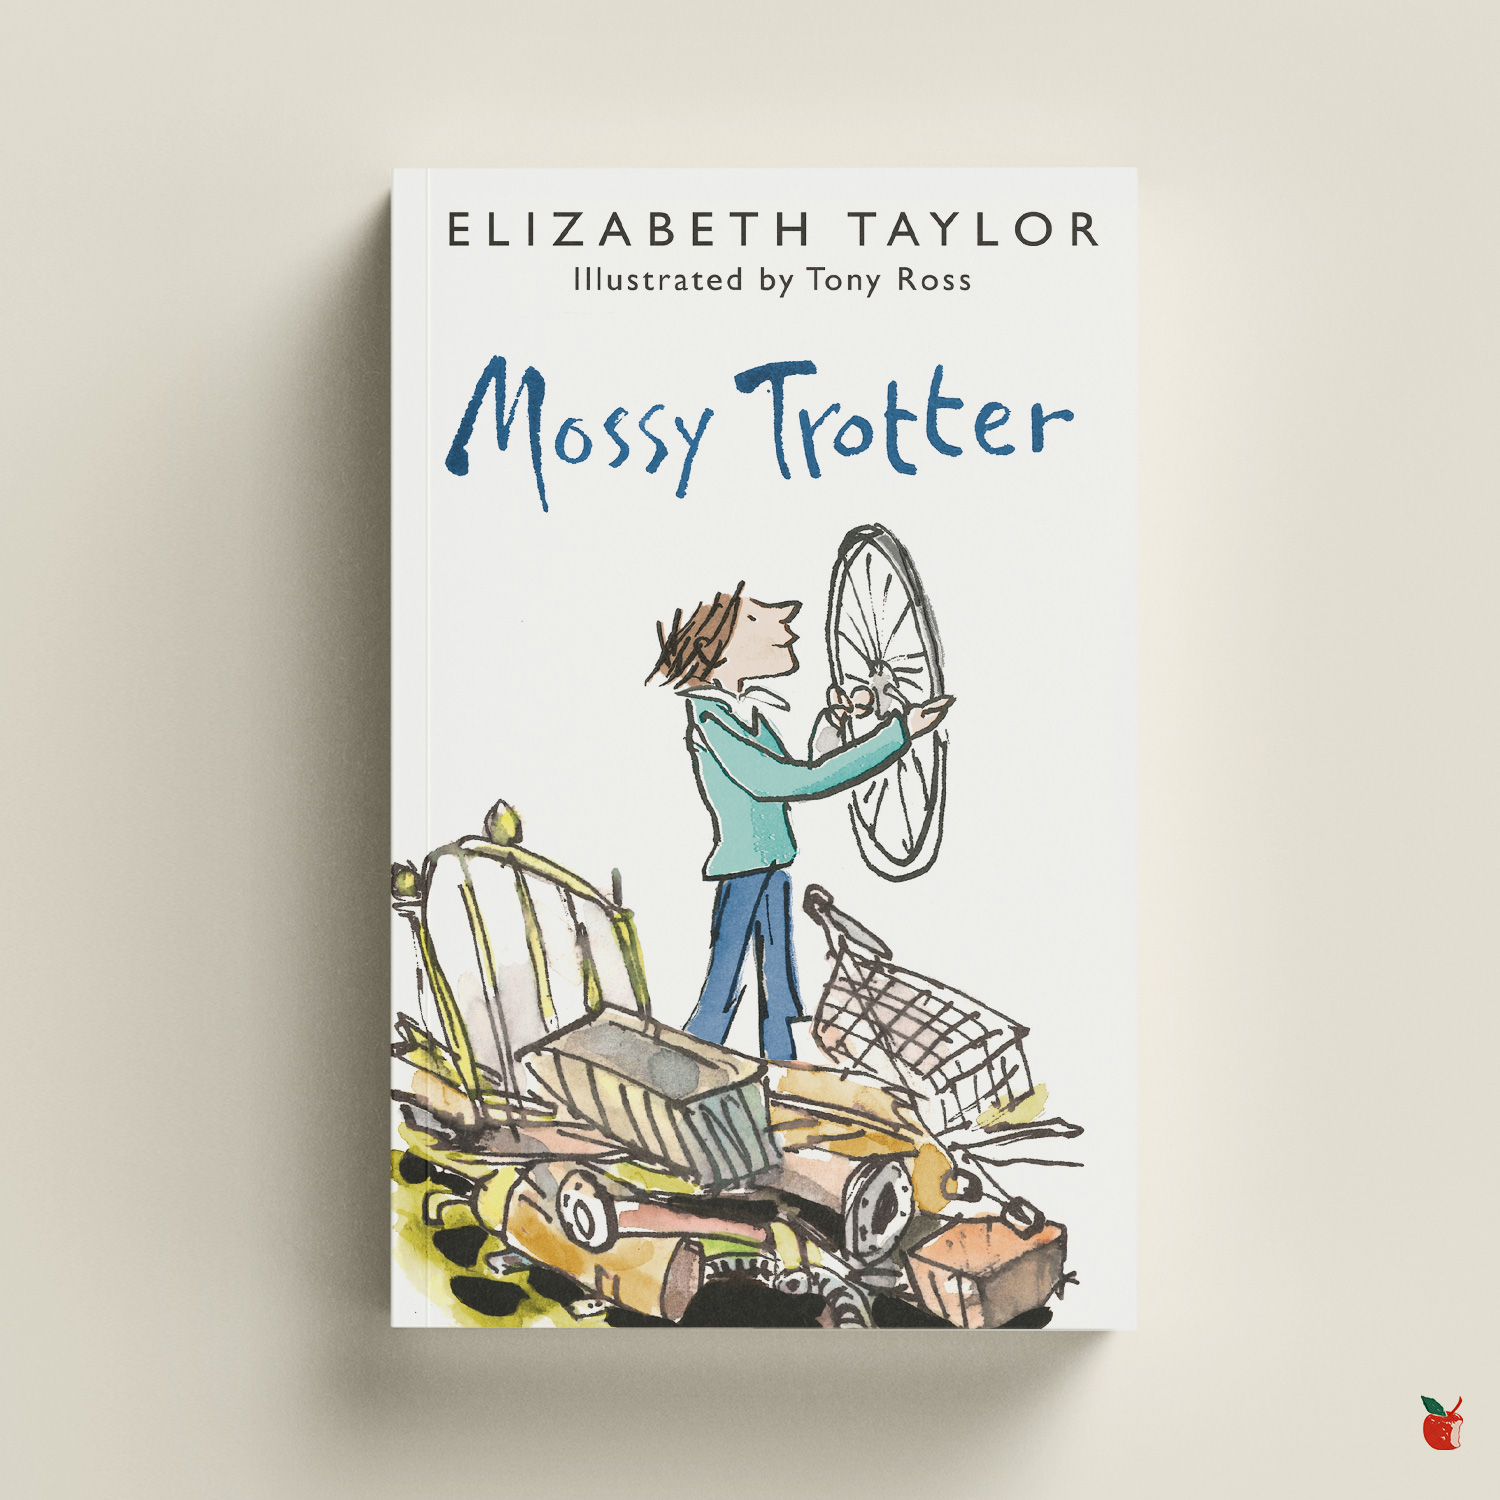 Mossy Trotter by Elizabeth Taylor